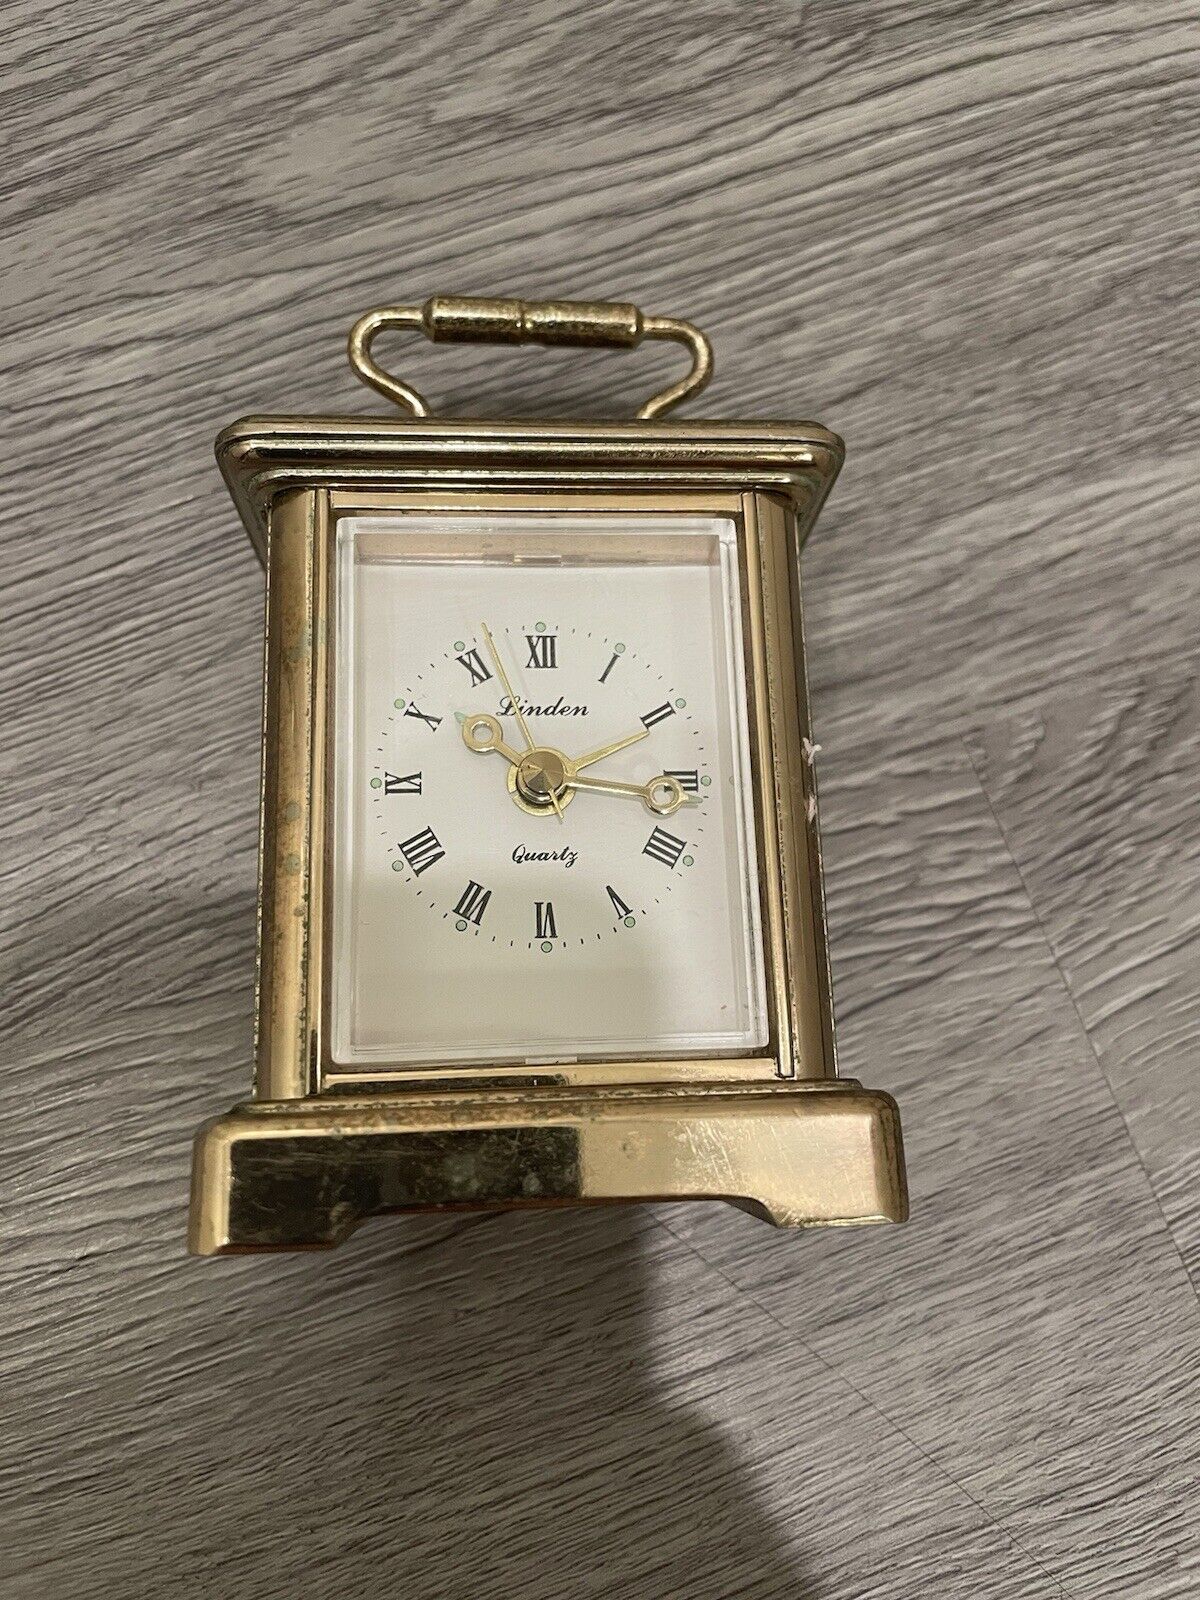  Vintage Linden Brass Glass Office Desk Clock with alarm